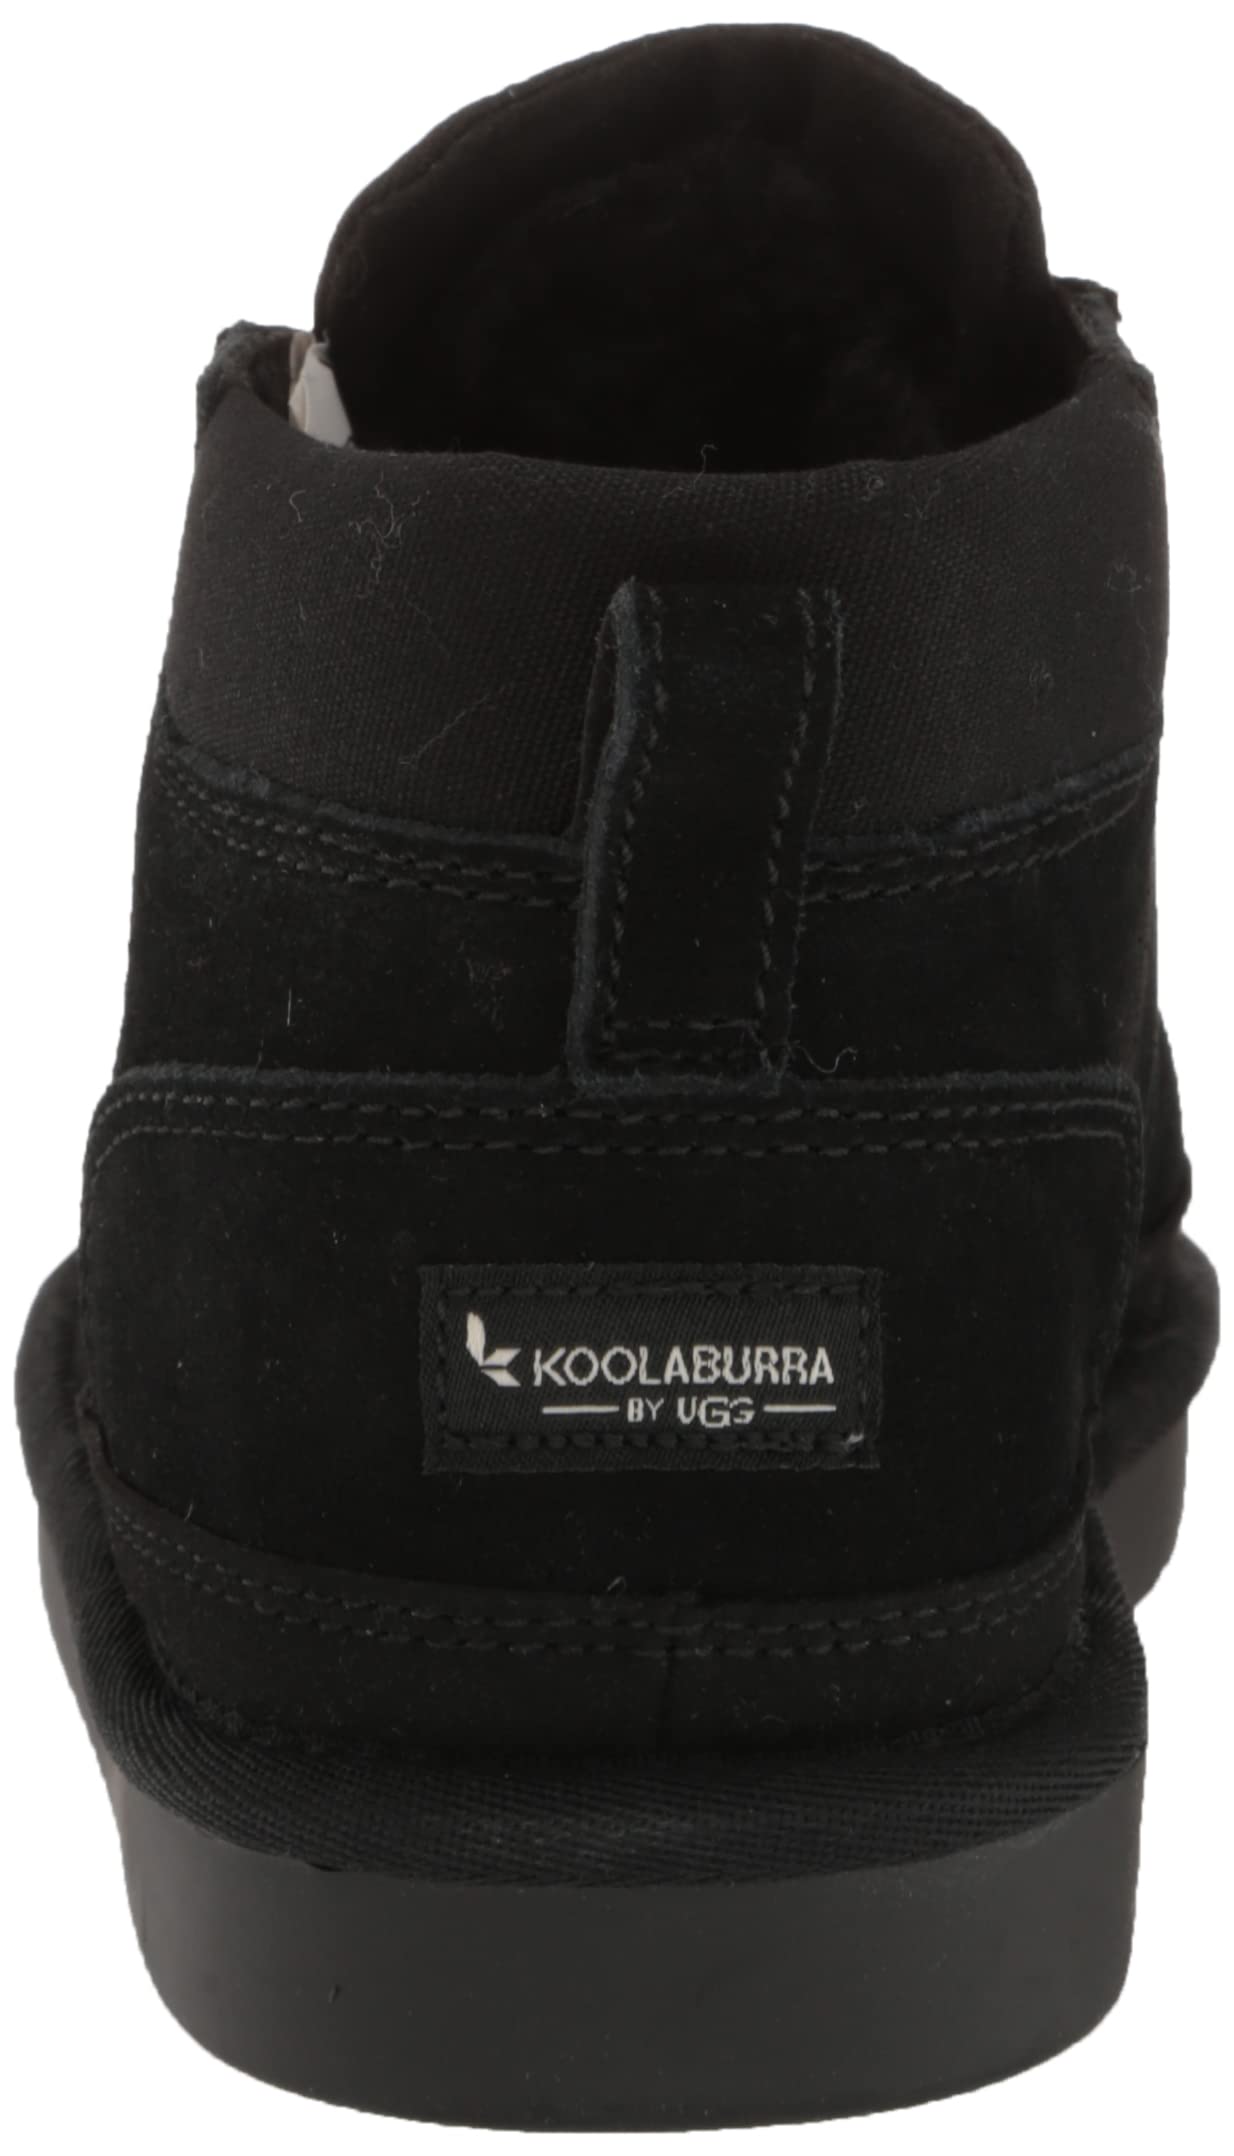 Koolaburra by UGG Unisex-Child Advay Chukka Boot